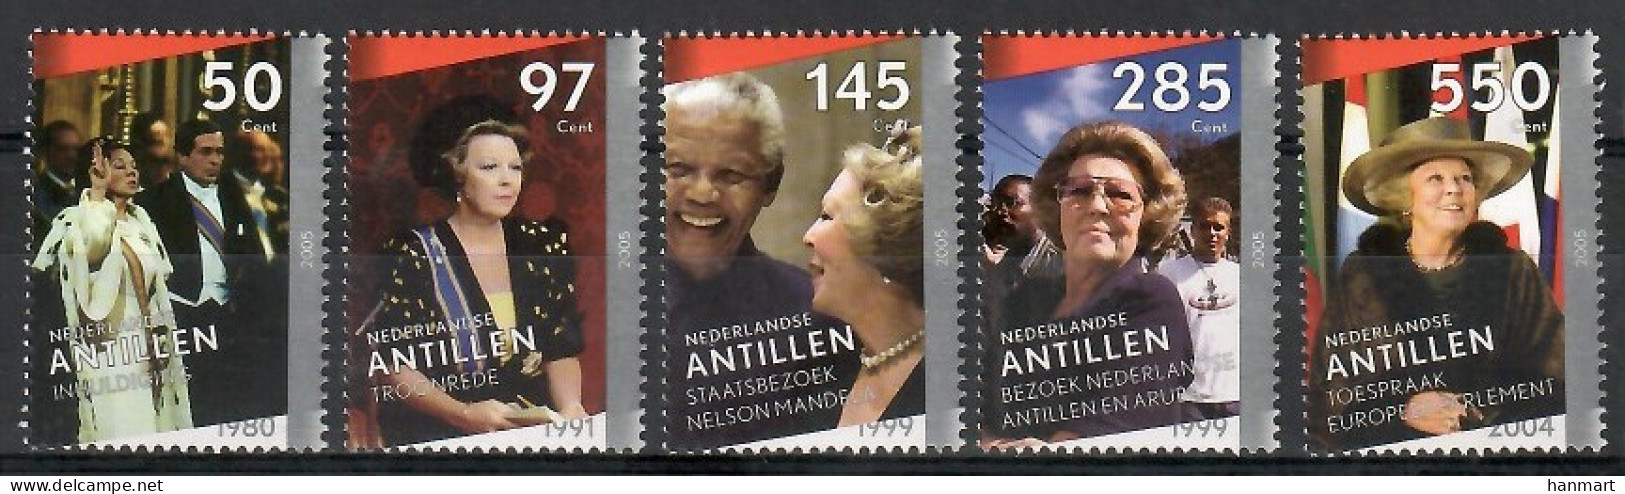 Netherlands Antilles 2005 Mi 1367-1371 MNH  (ZS2 DTA1367-1371) - Royalties, Royals